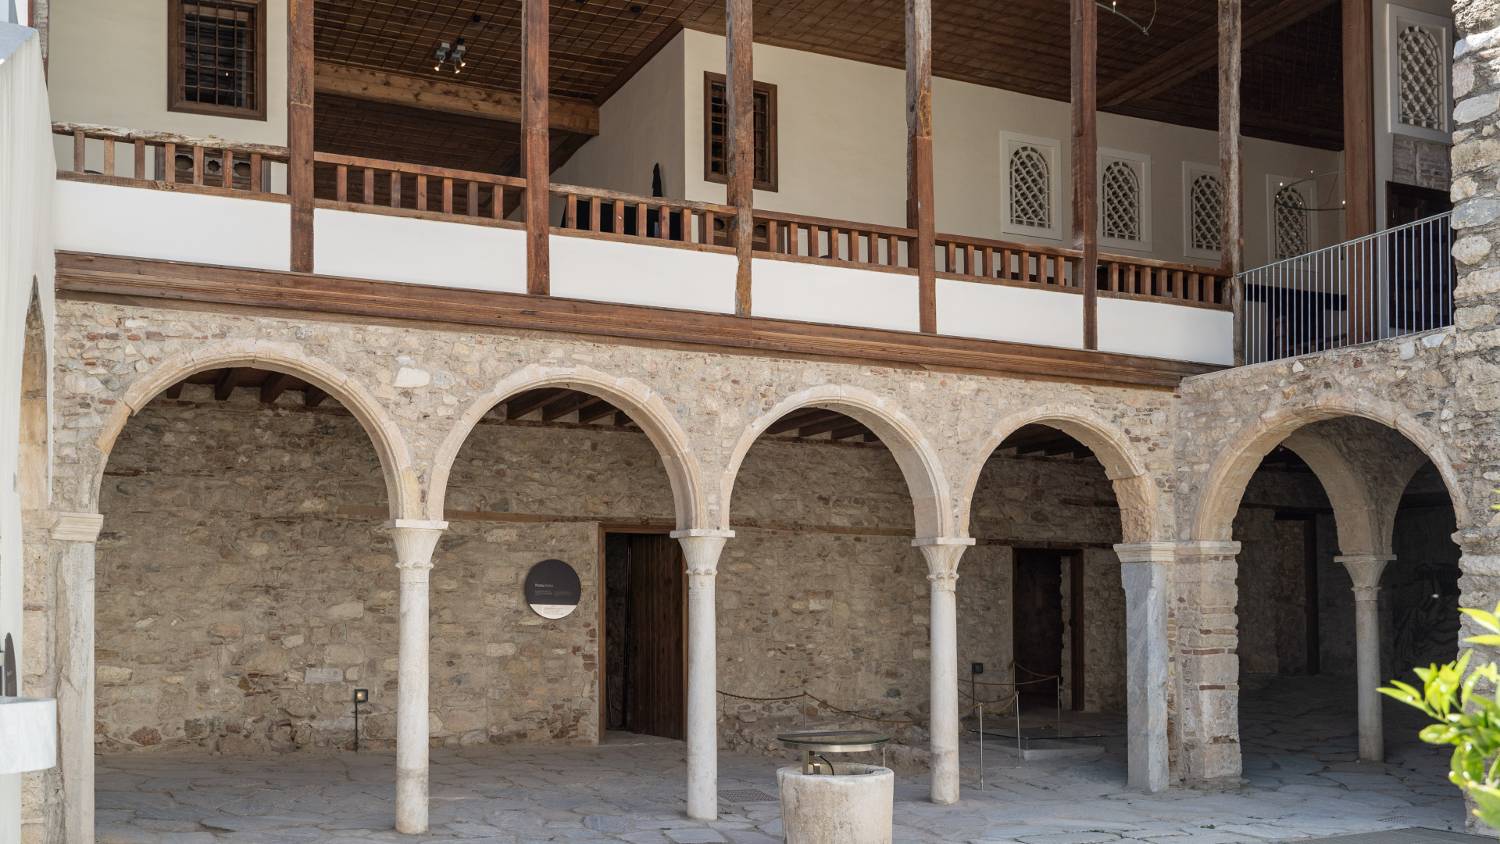 Venizelos Mansion offers a glimpse into Ottoman life in Athens (Nick Paleologos)